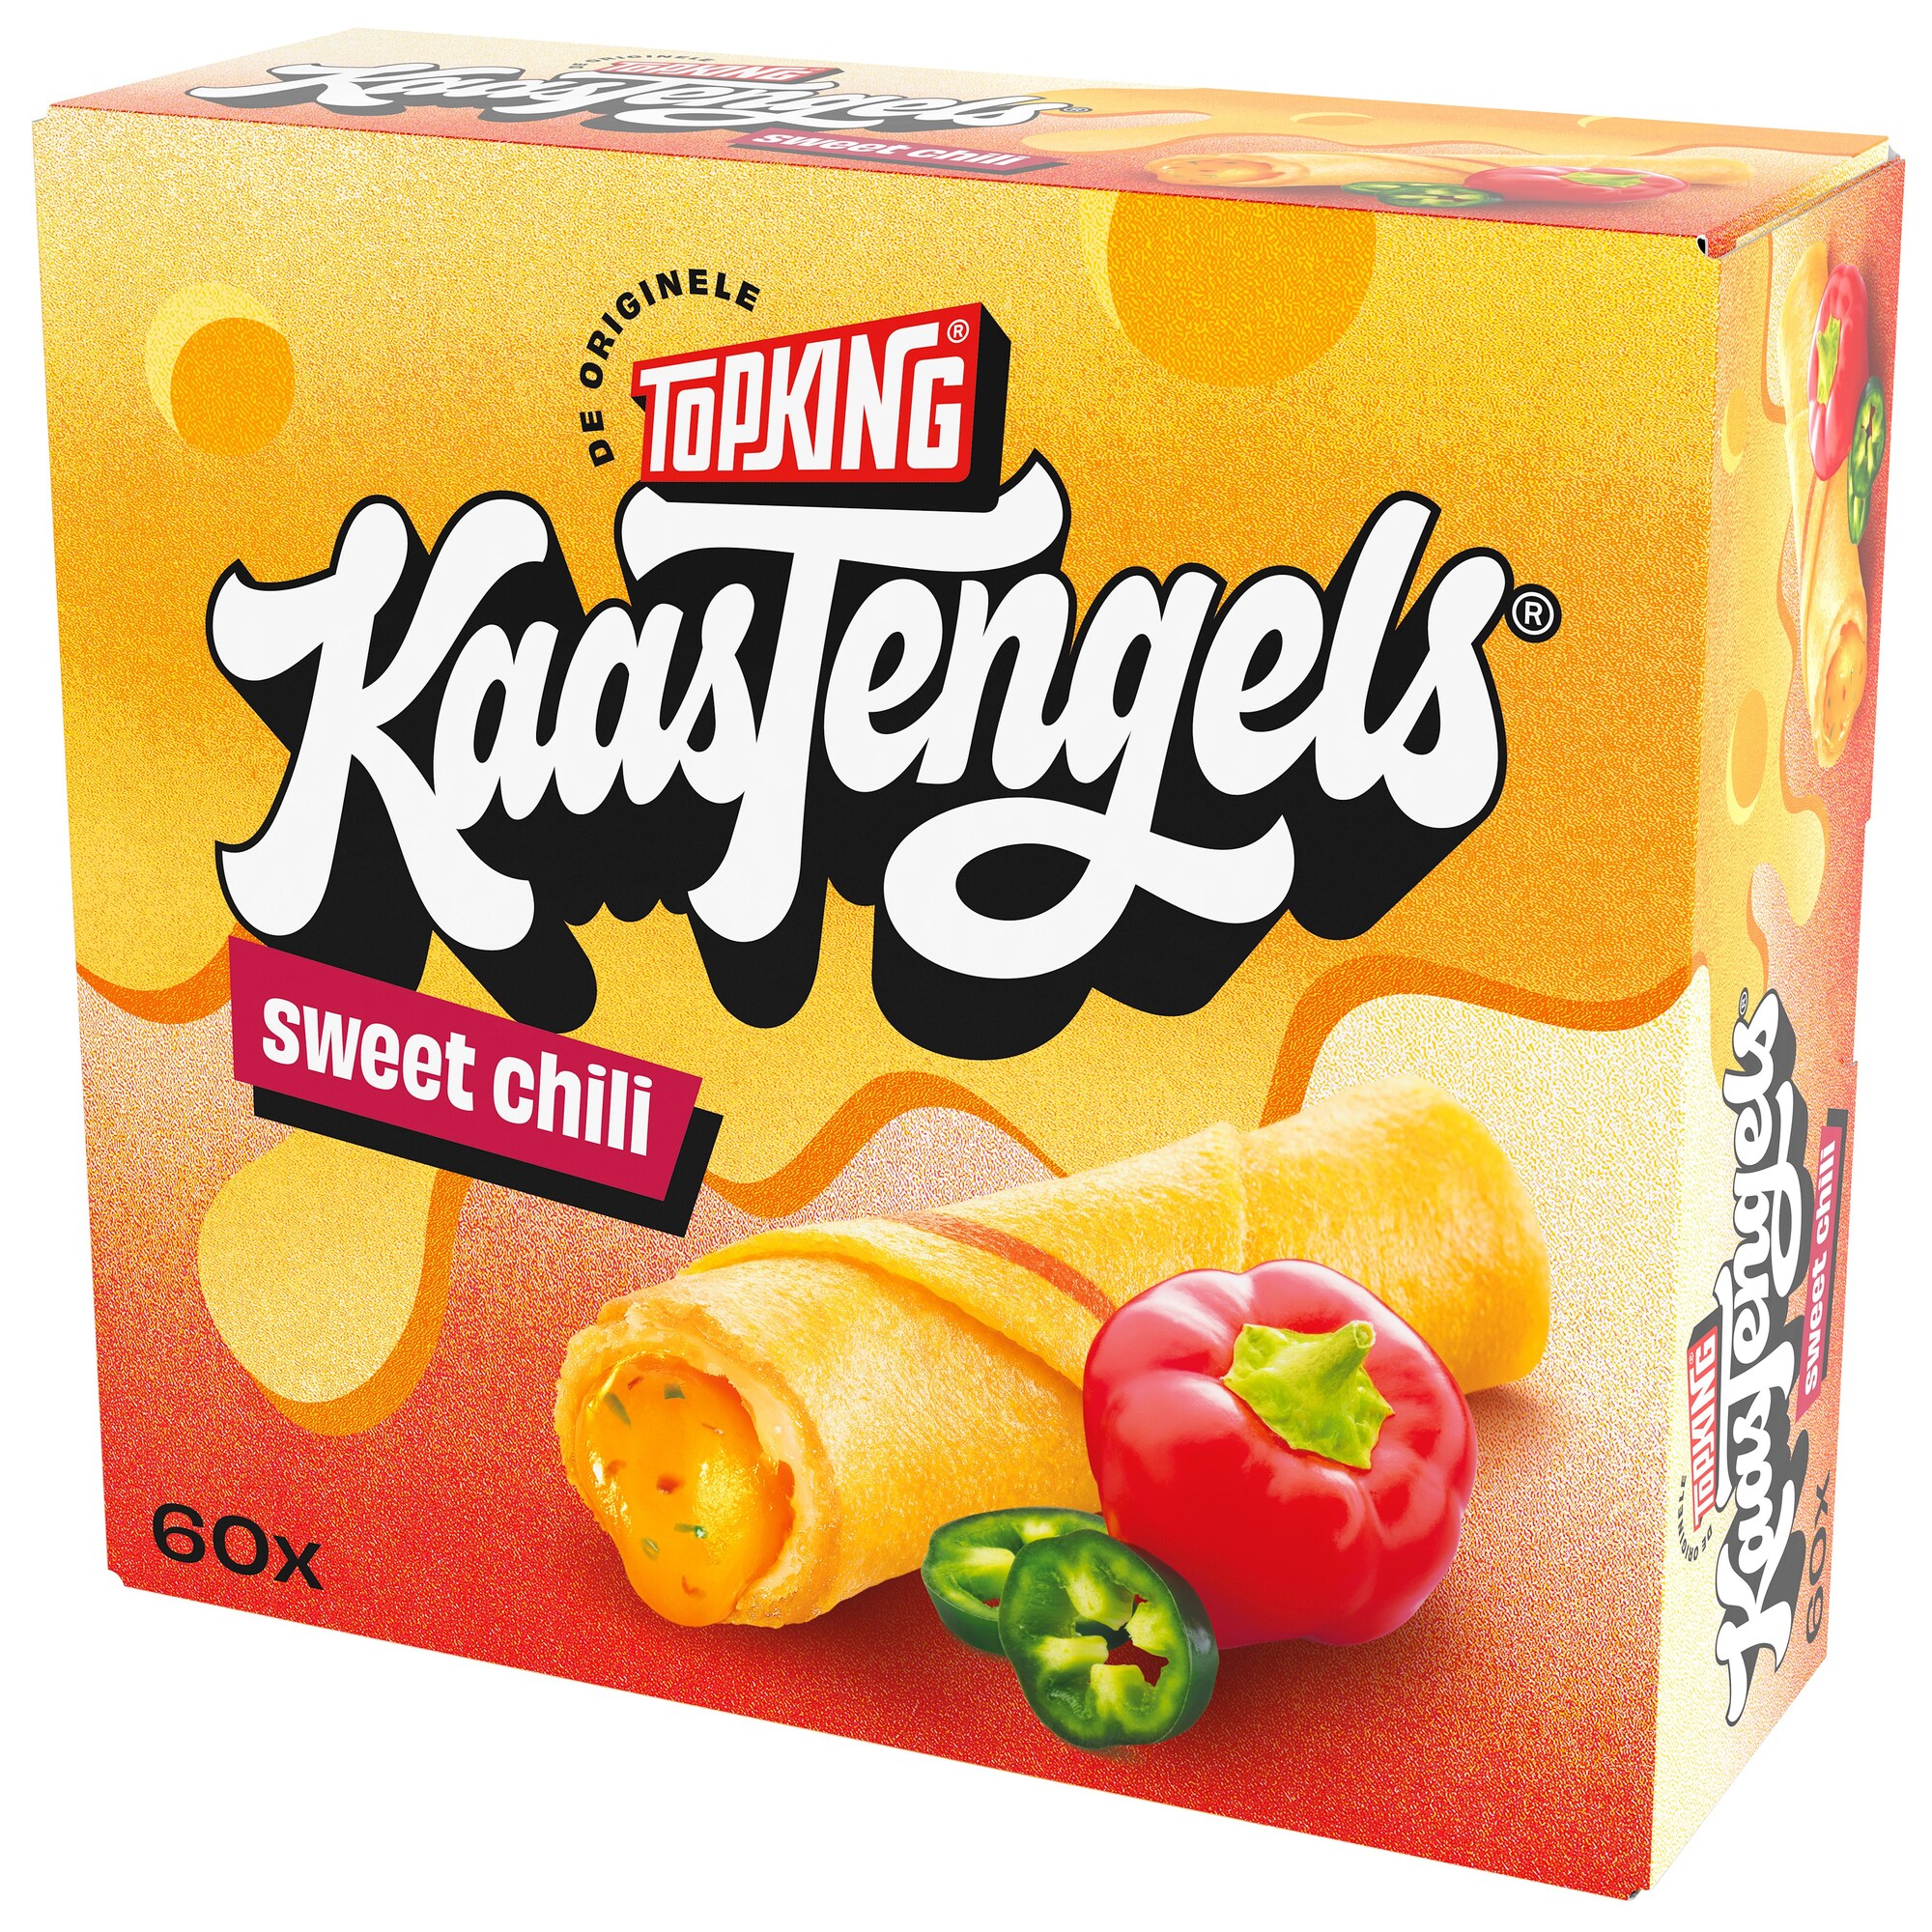 55781 Kaastengels sweet chili 60x15 gr